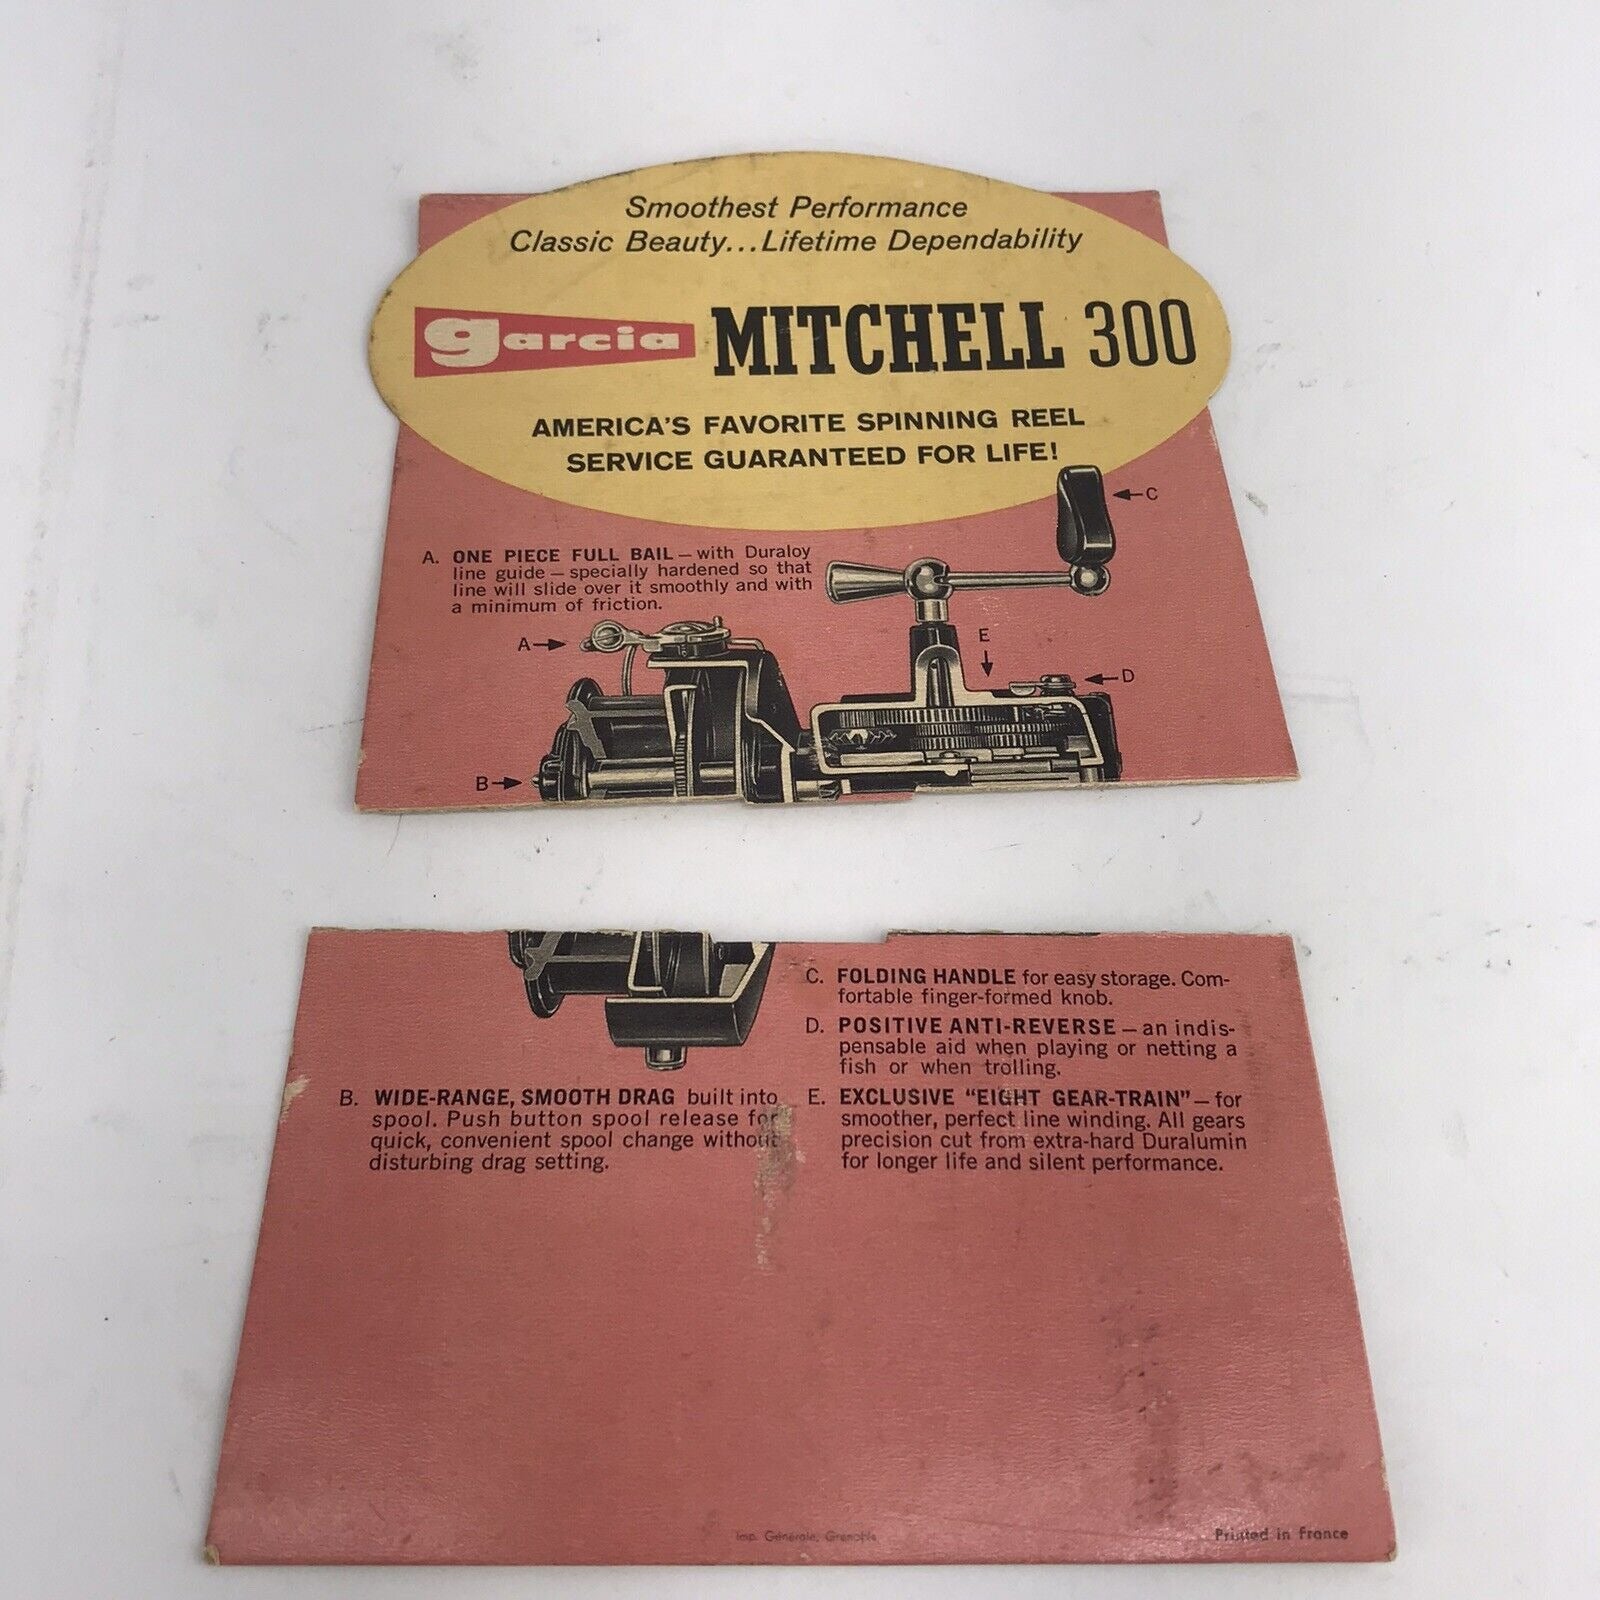 Vintage Garcia Mitchell 300 Reel Cardboard Advertisement